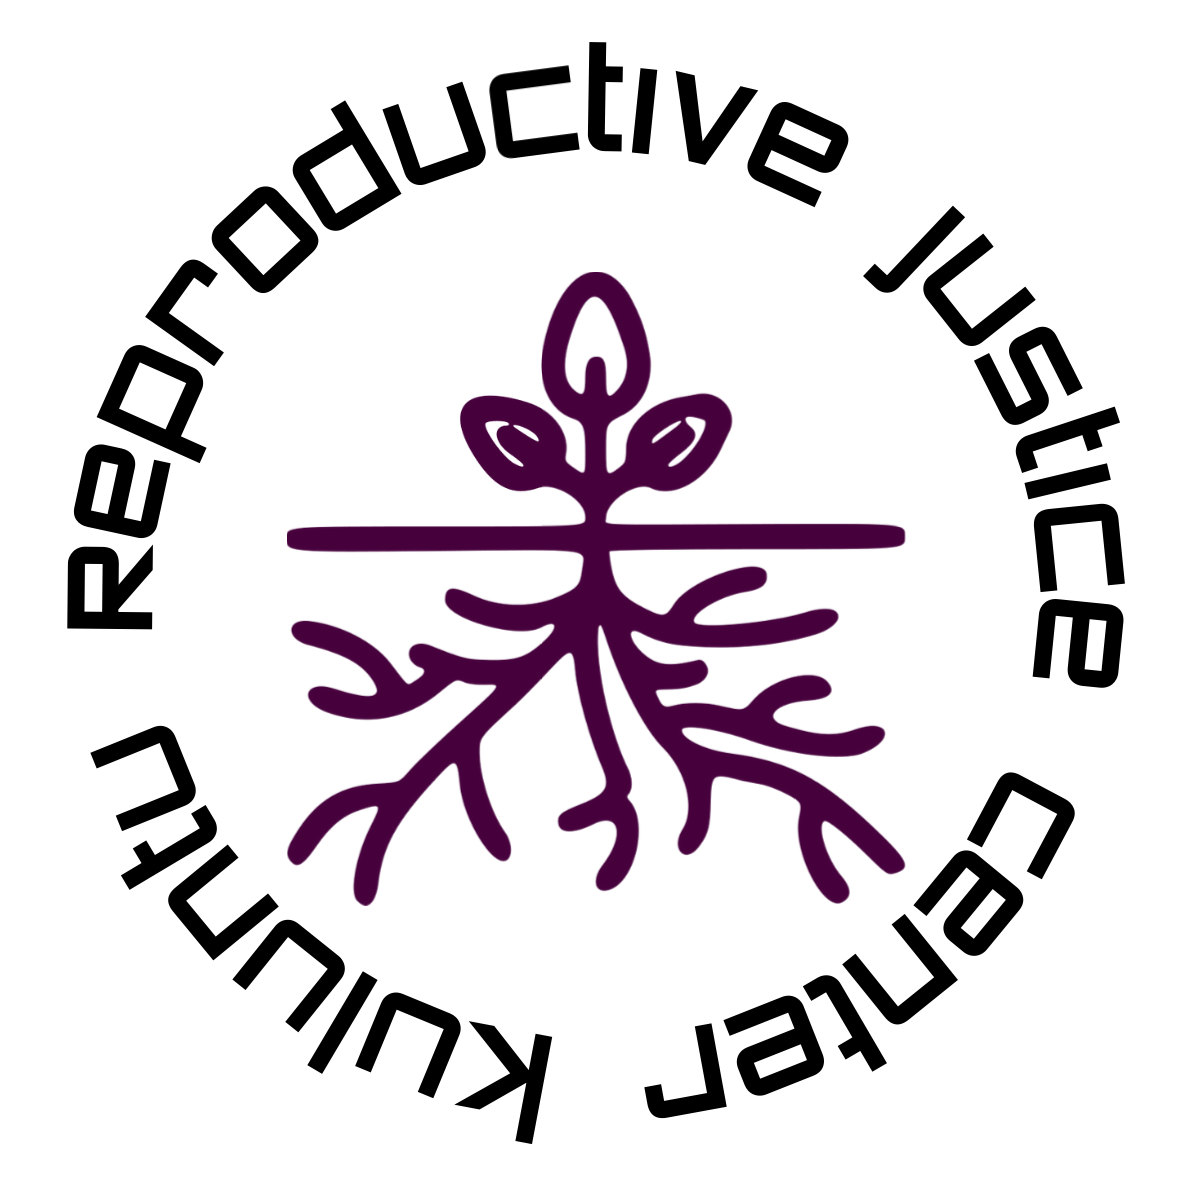 Kuluntu Reproductive Justice Center